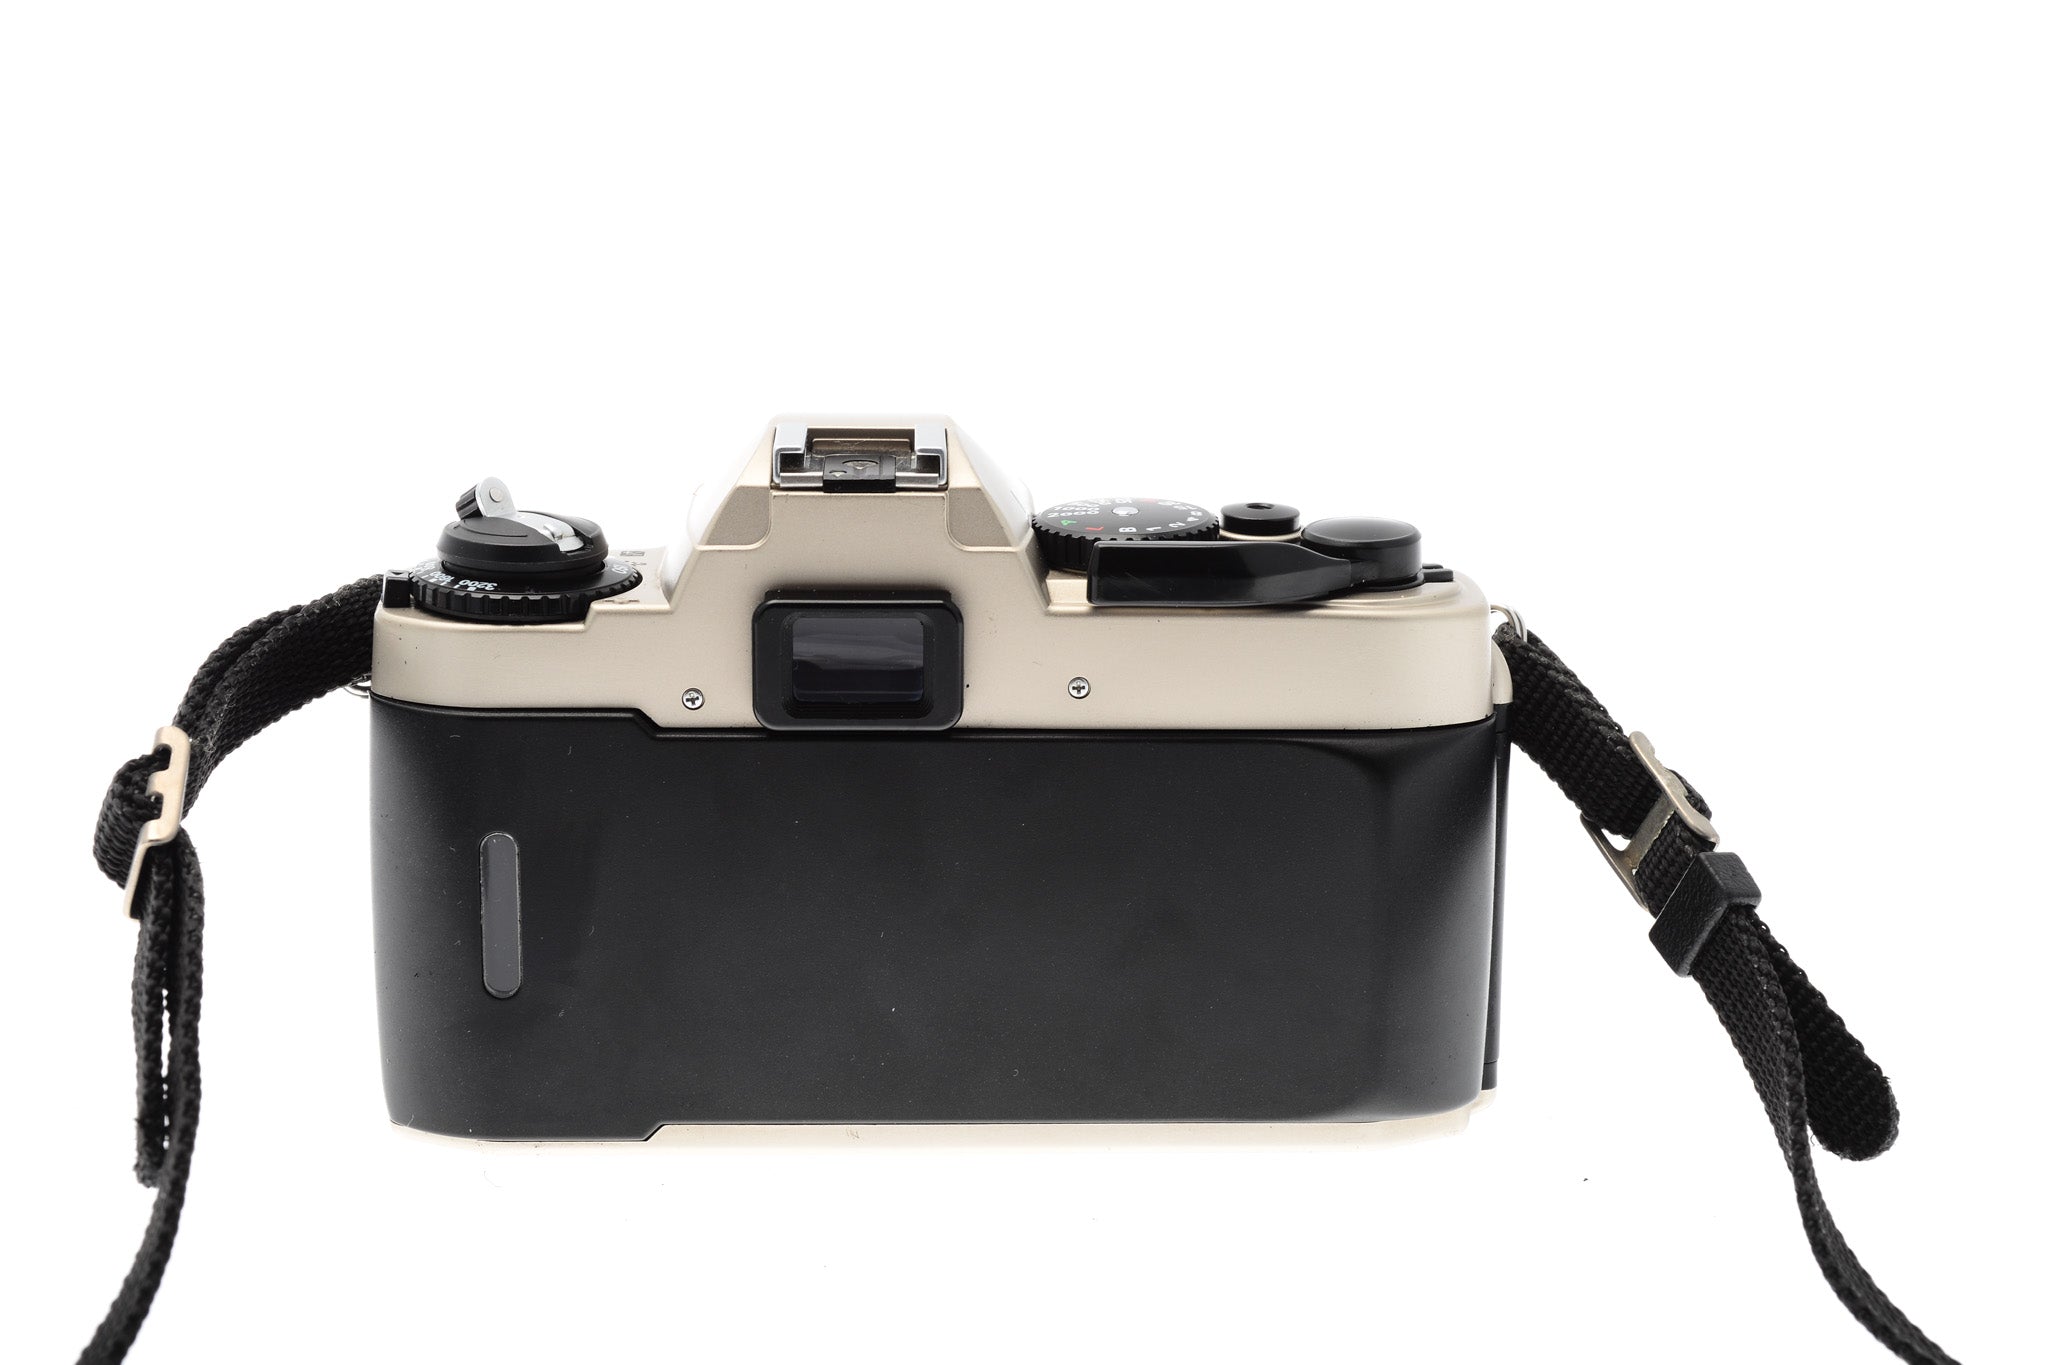 Nikon FE10 - 35mm Film Camera Body - with 6 month warranty